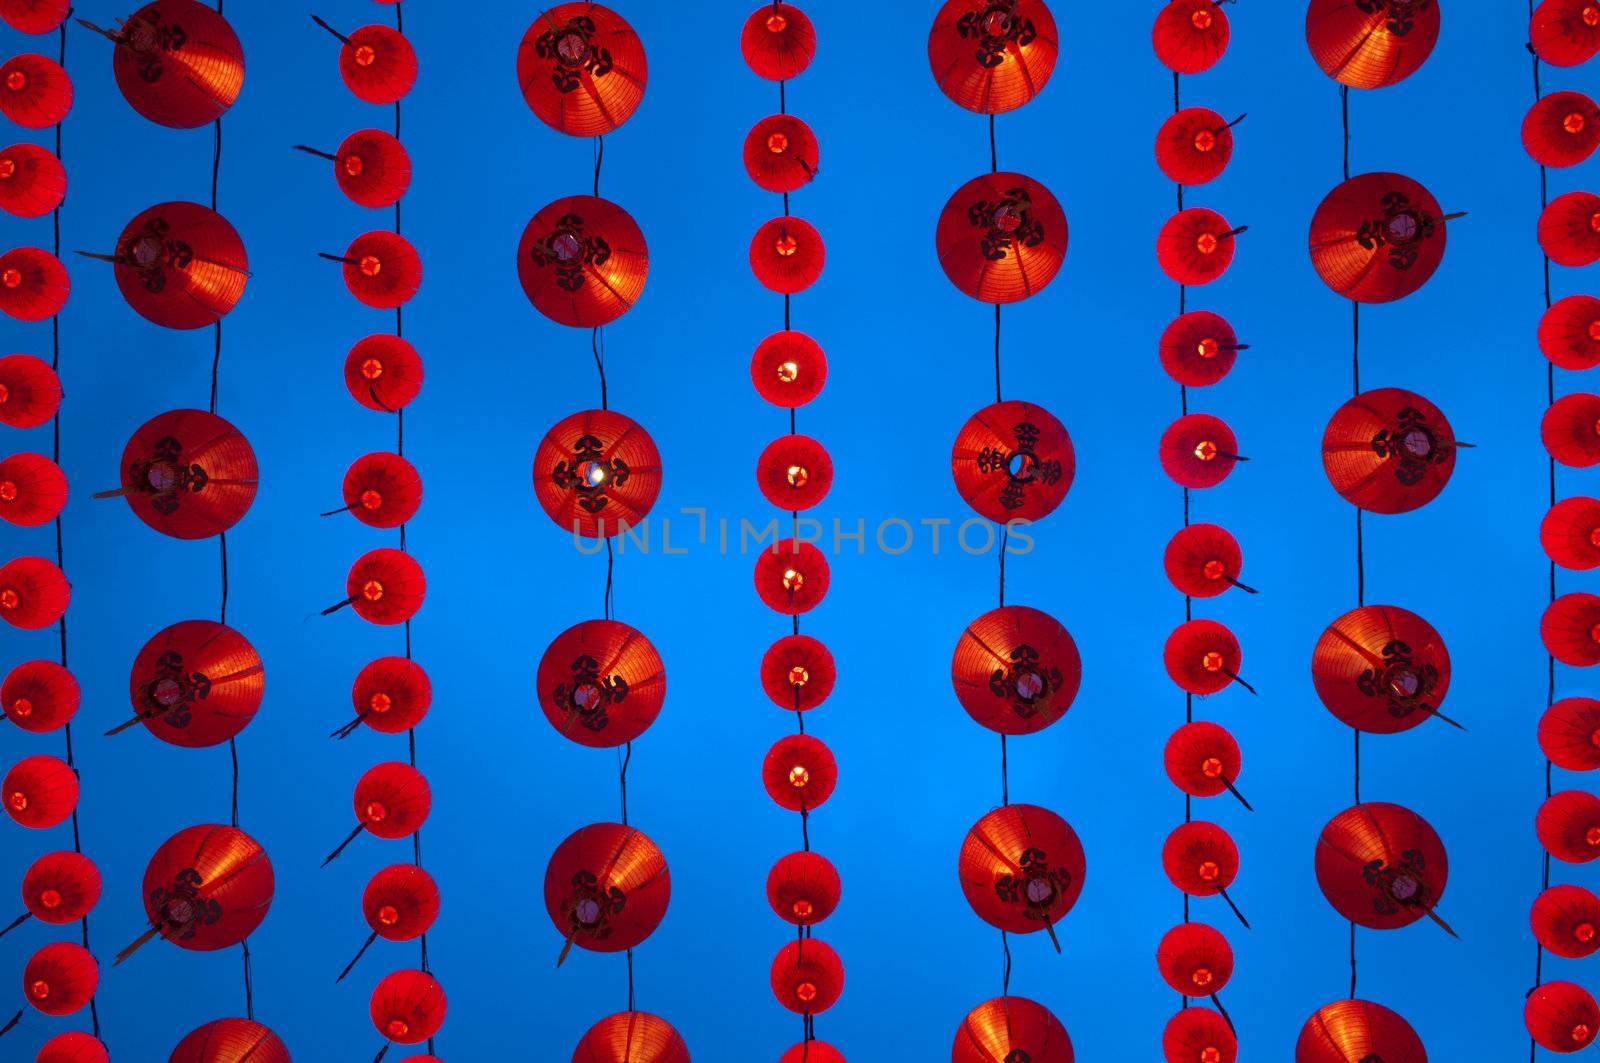 Chinese lanterns display by szefei